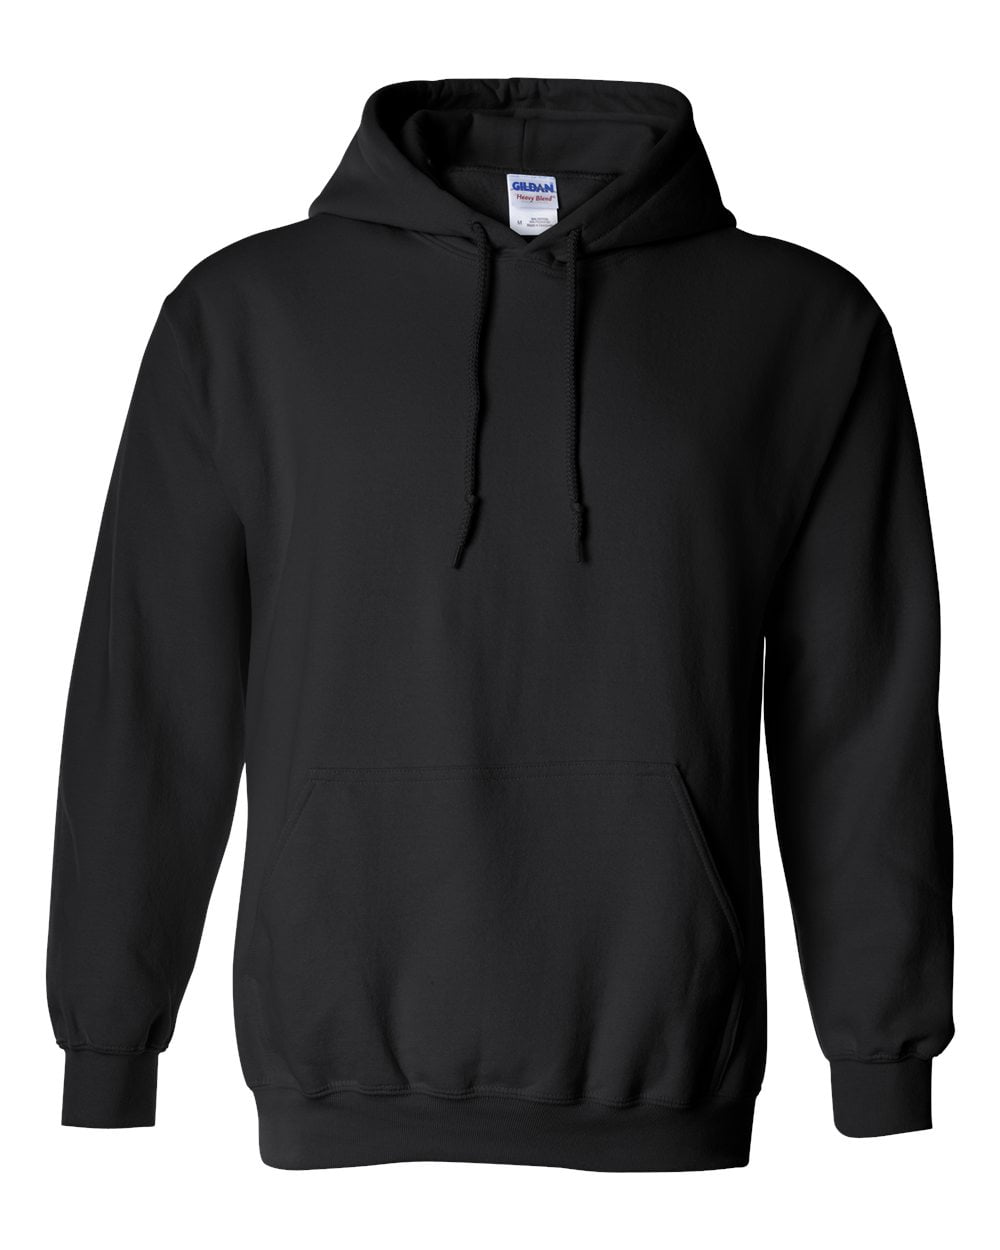 Hooded Sweatshirt Jumper s-5XL 18500 GILDAN Hoodie Men's Heavy Cotton Blend 